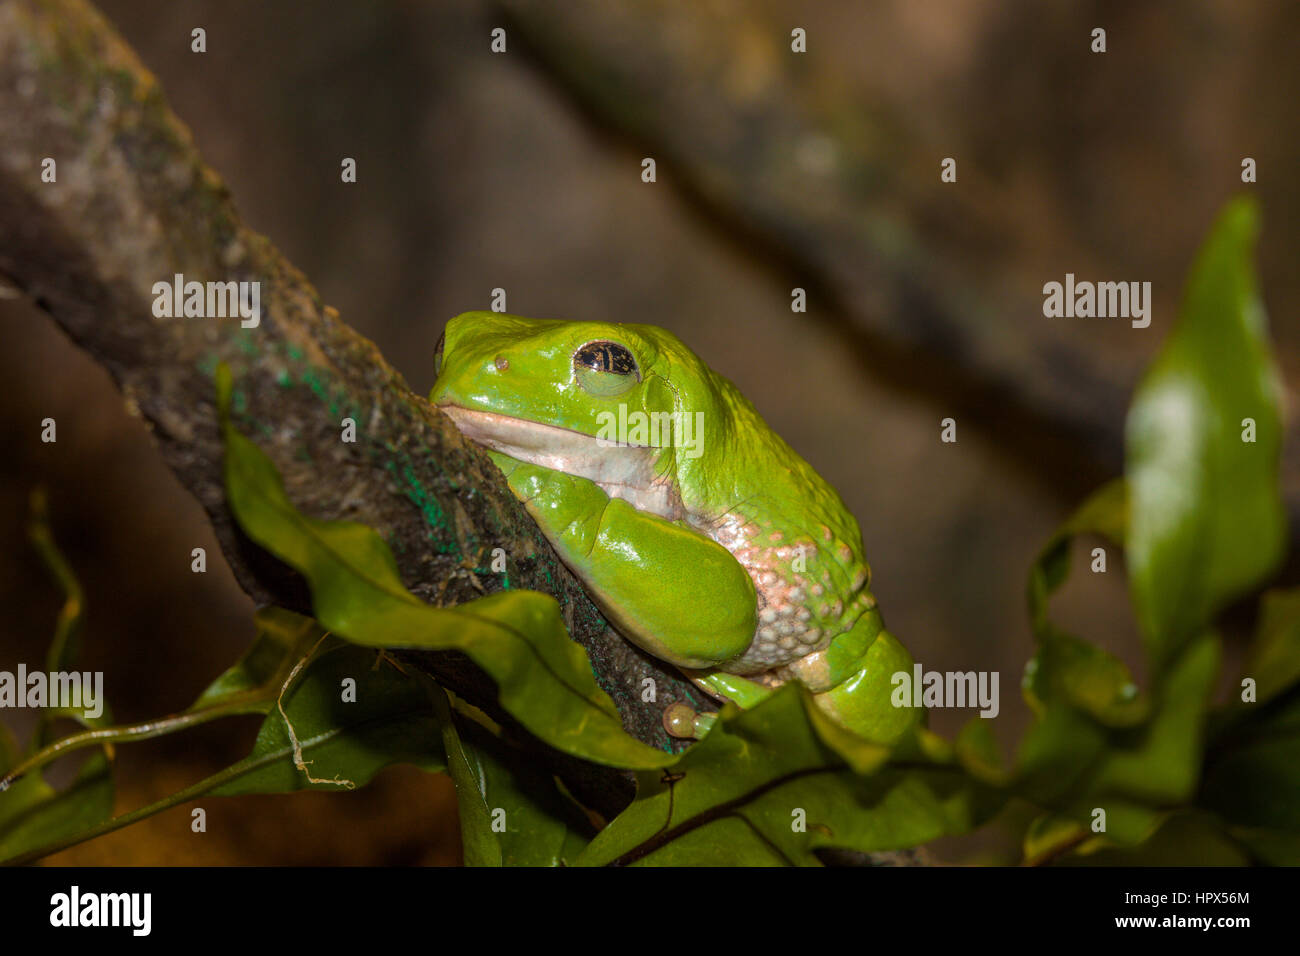 Closeup of Mexican Dumpy Frog Stock Photo